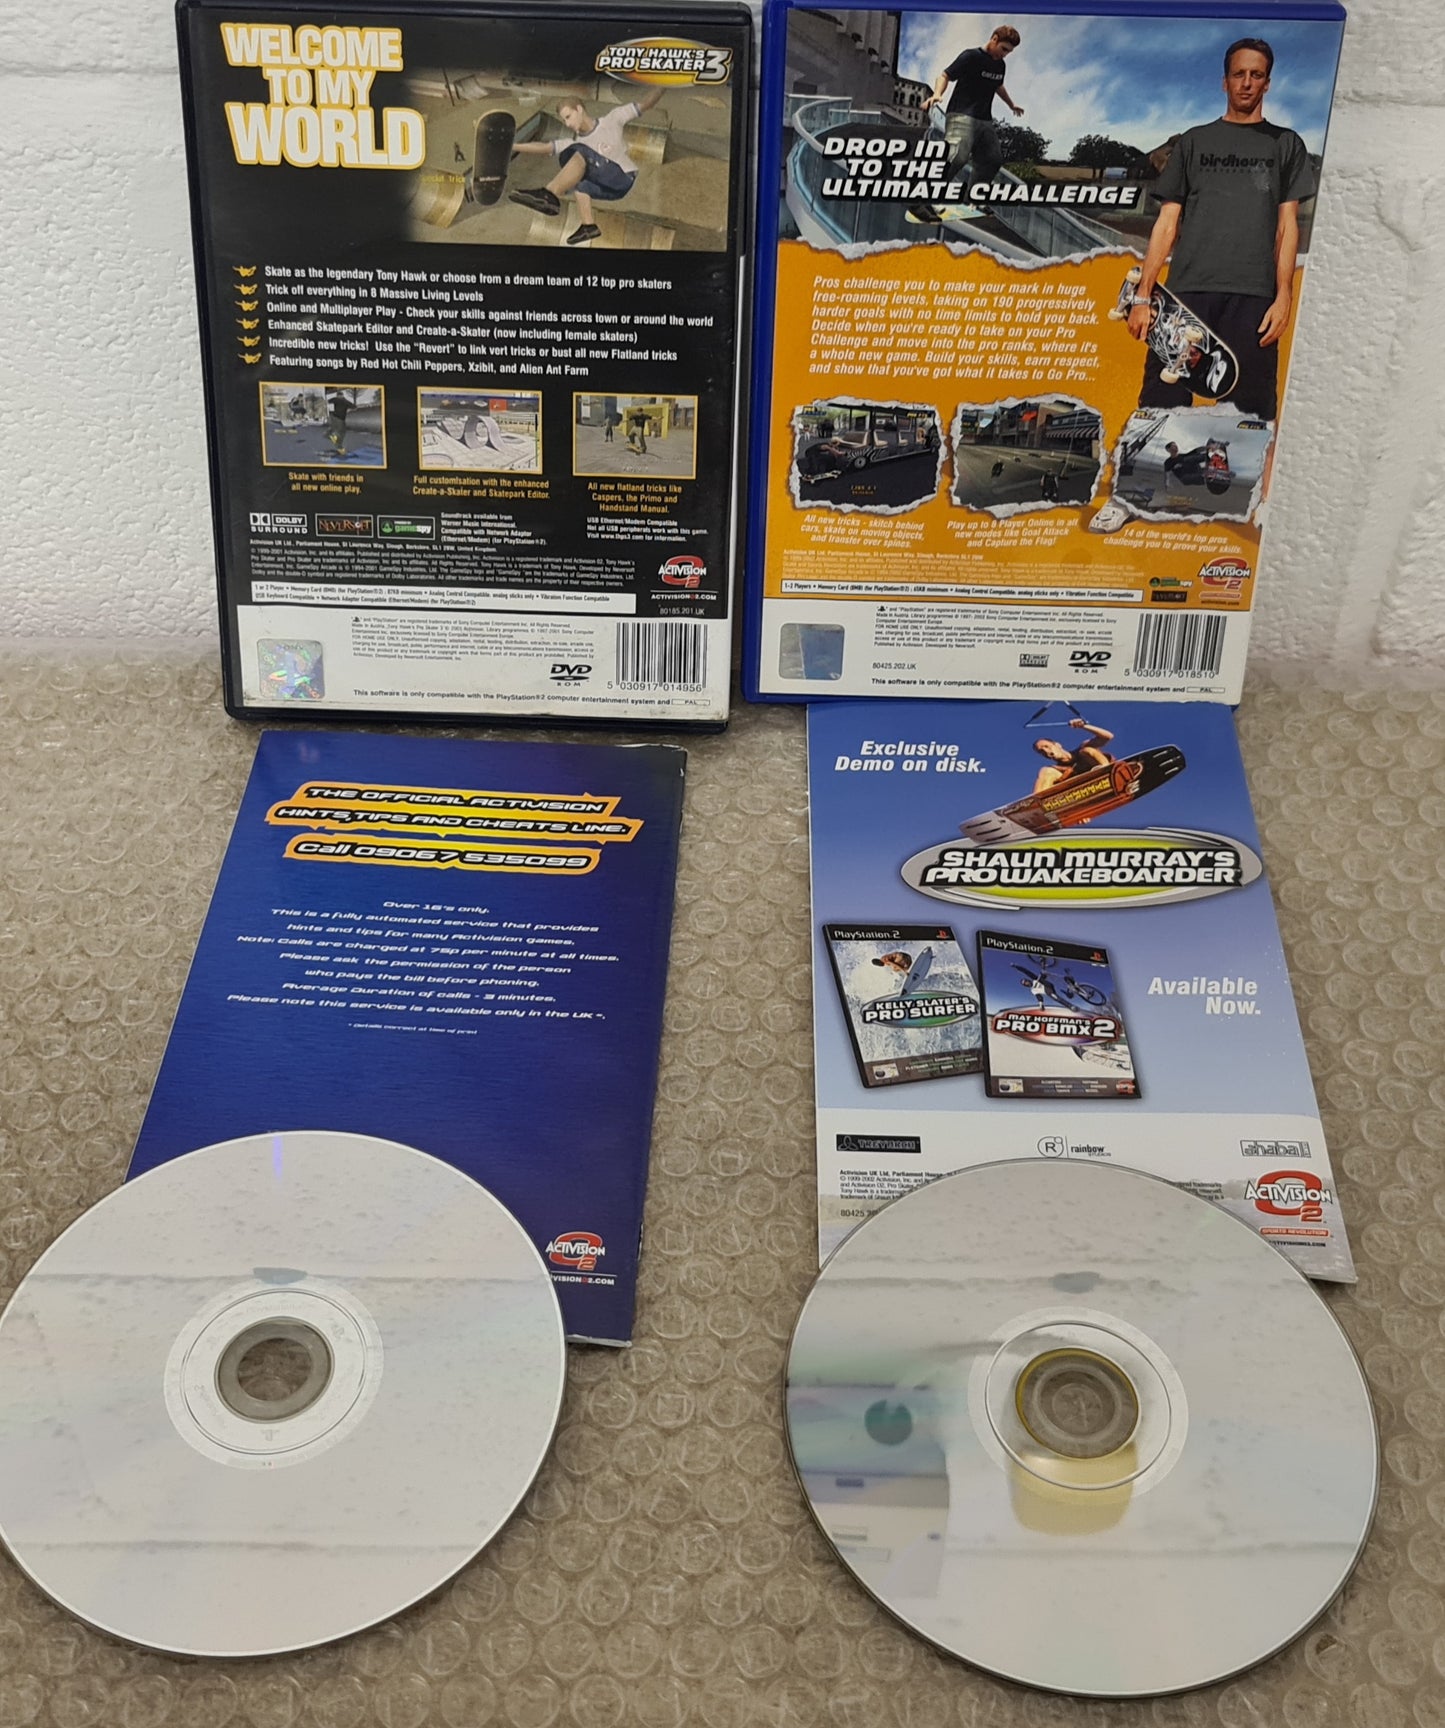 Tony Hawk's Pro Skater 3 & 4 Sony Playstation 2 (PS2) Game Bundle